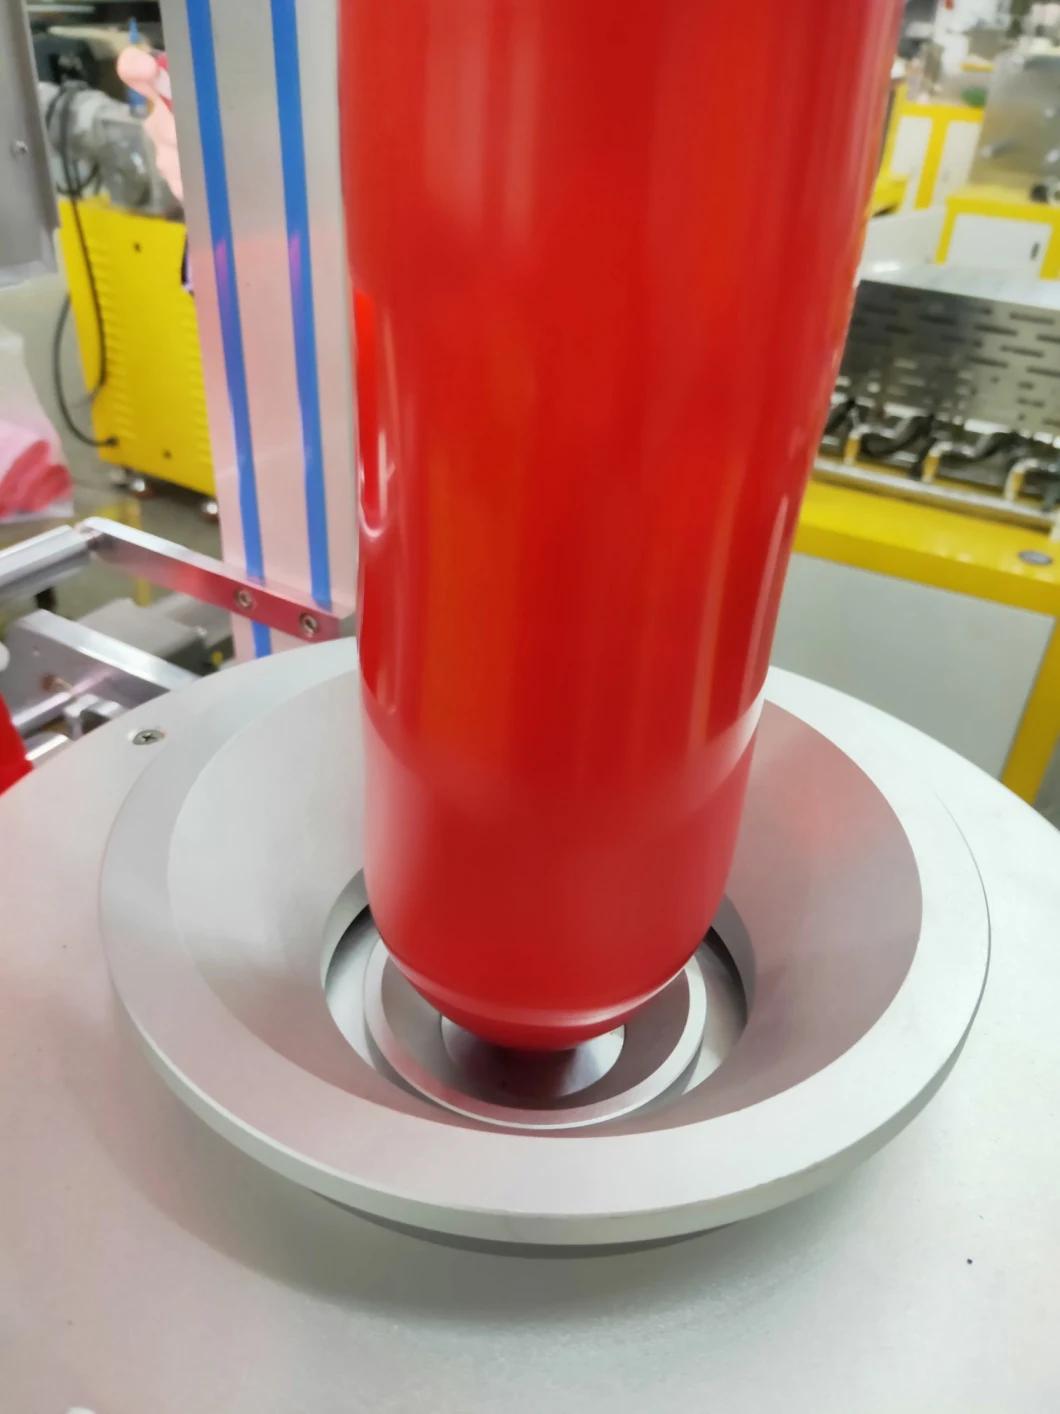 Nylon Blowing Film Extrusion Machine for Laboratory Testing